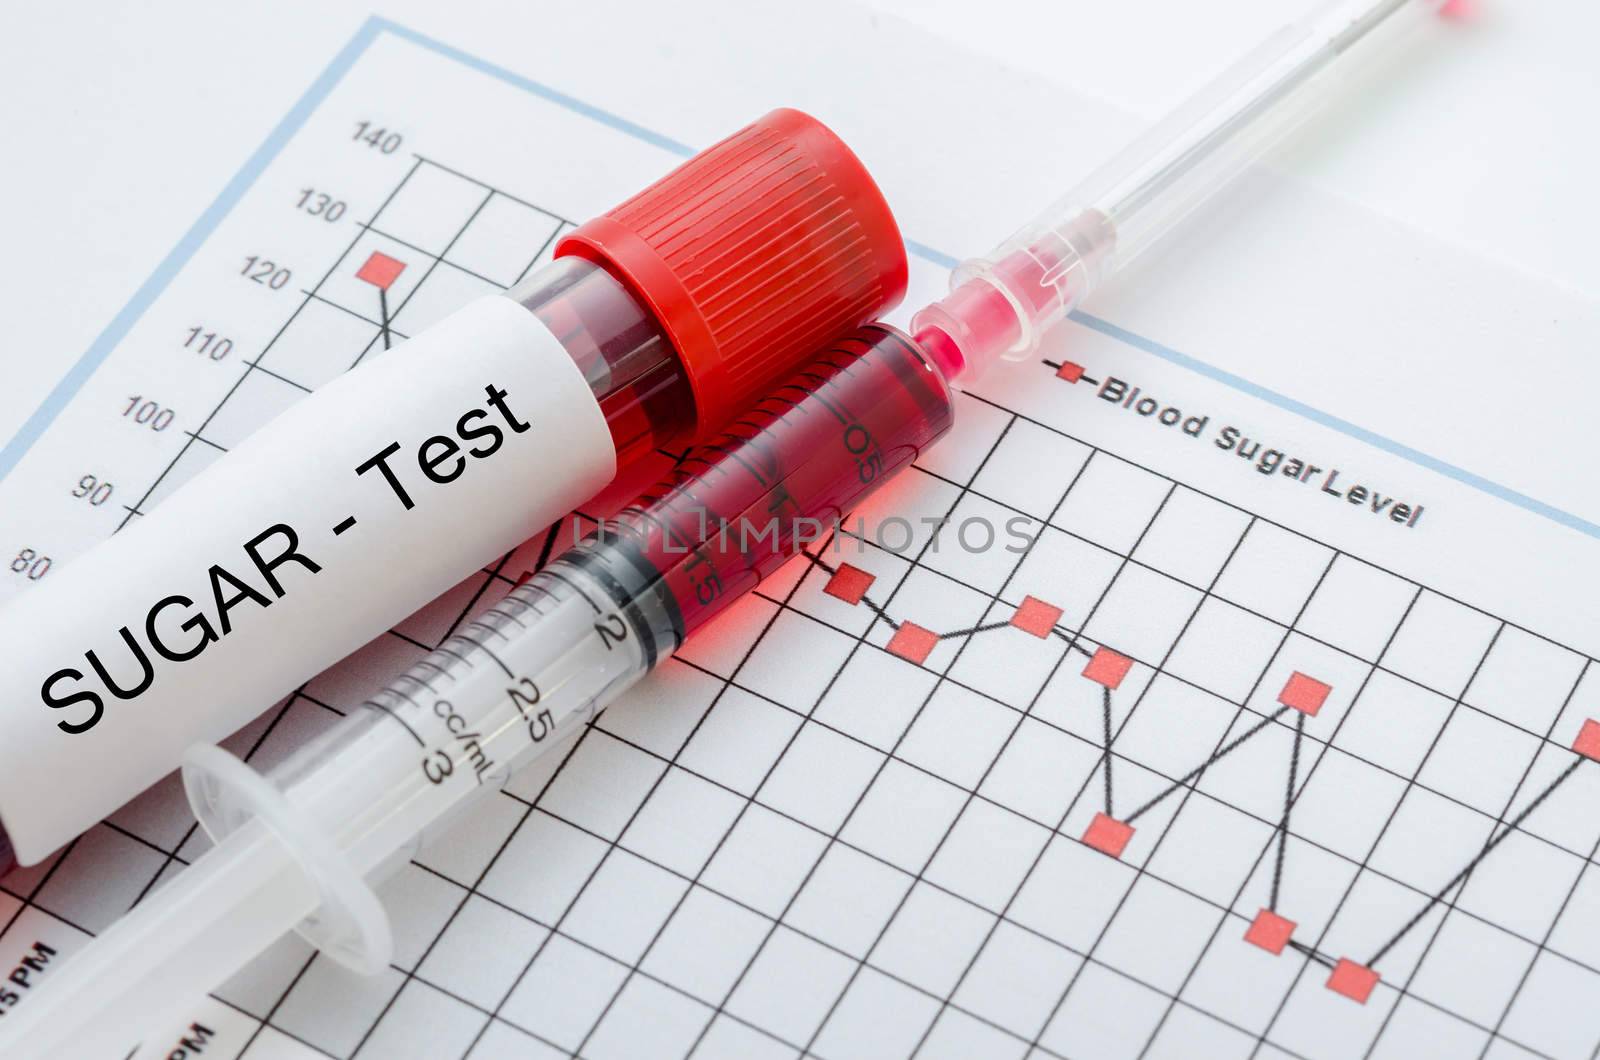 Sample blood for screening diabetic test. by Gamjai